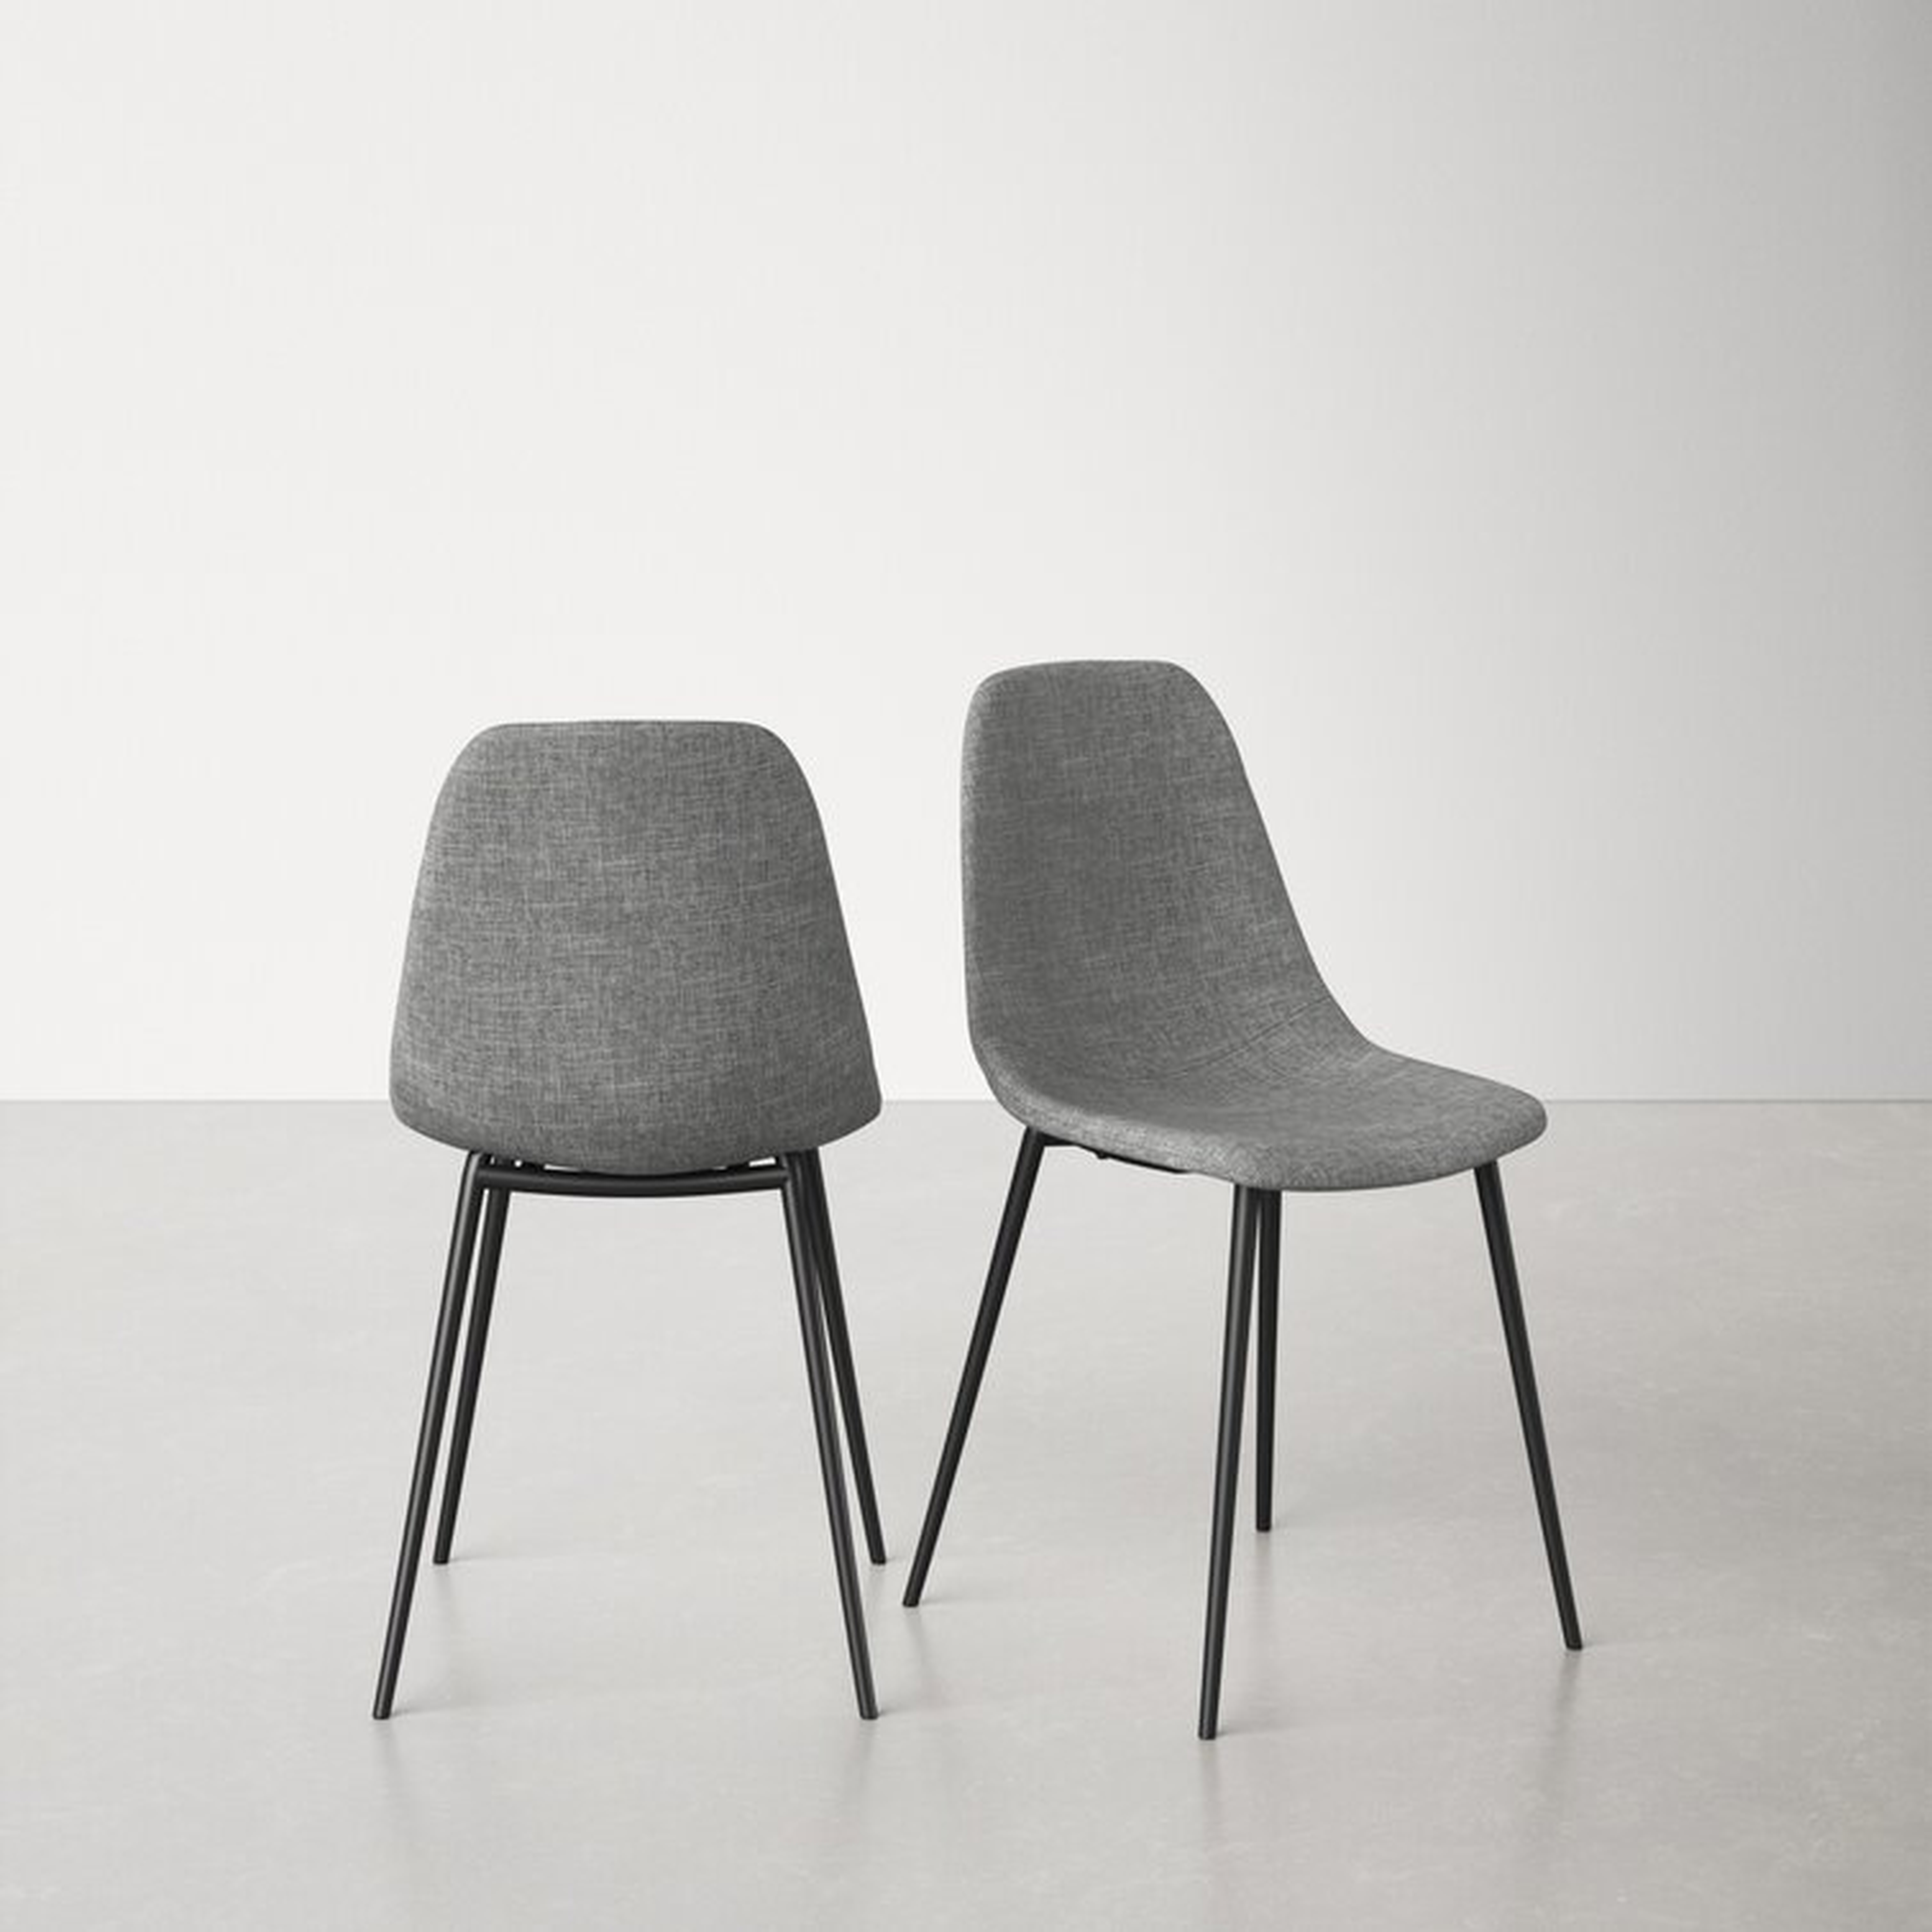 Kody Upholstered Side Chair set of 2 - Wayfair